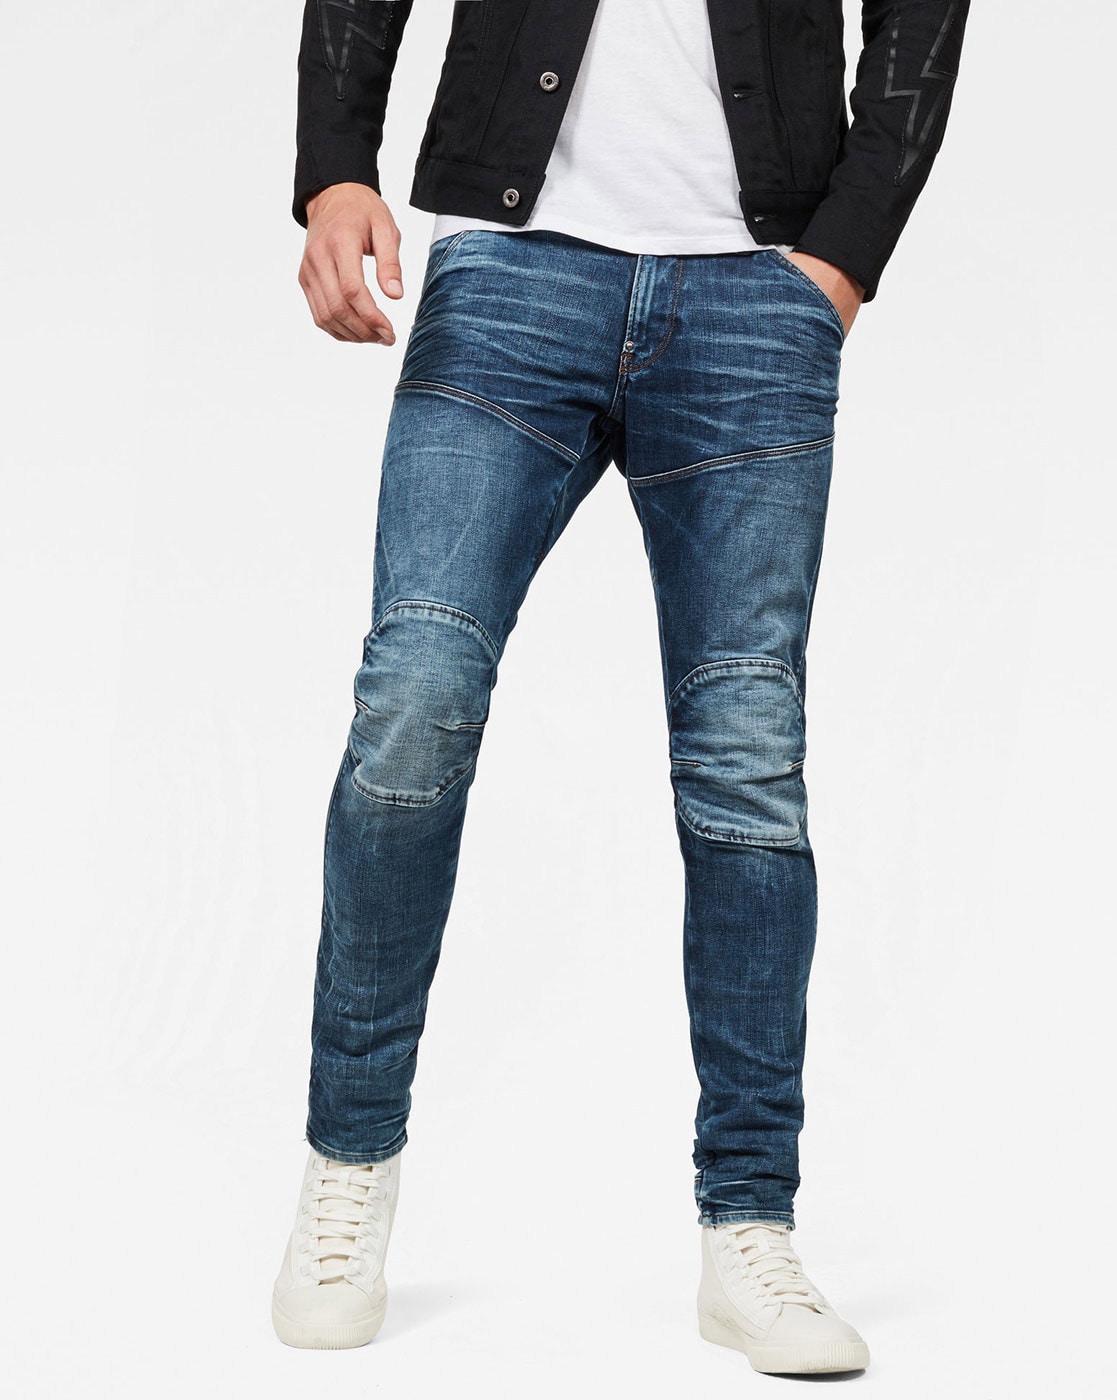 raw jeans online